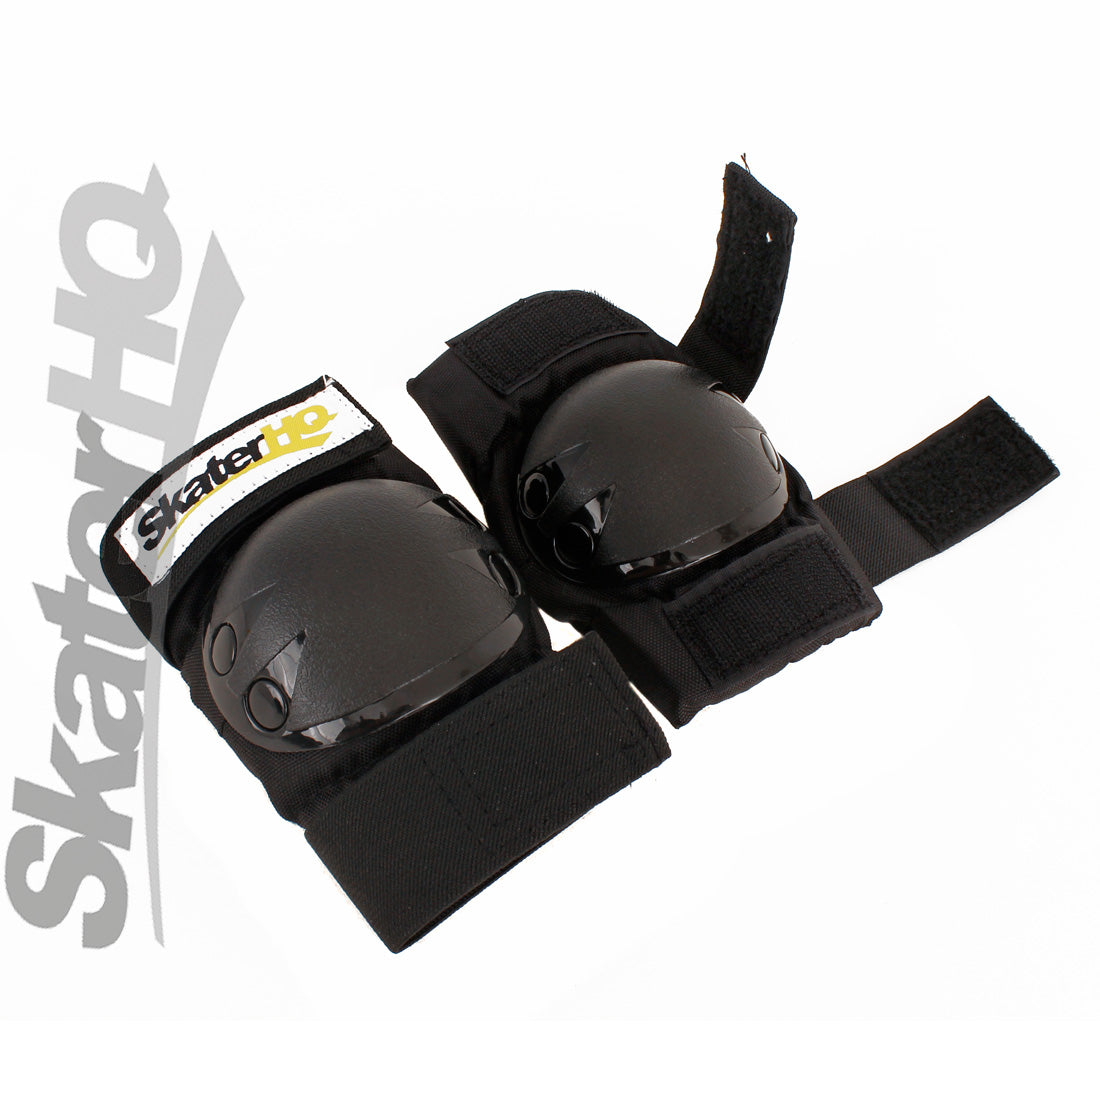 Skater HQ Tri Pack - Grommet Protective Gear